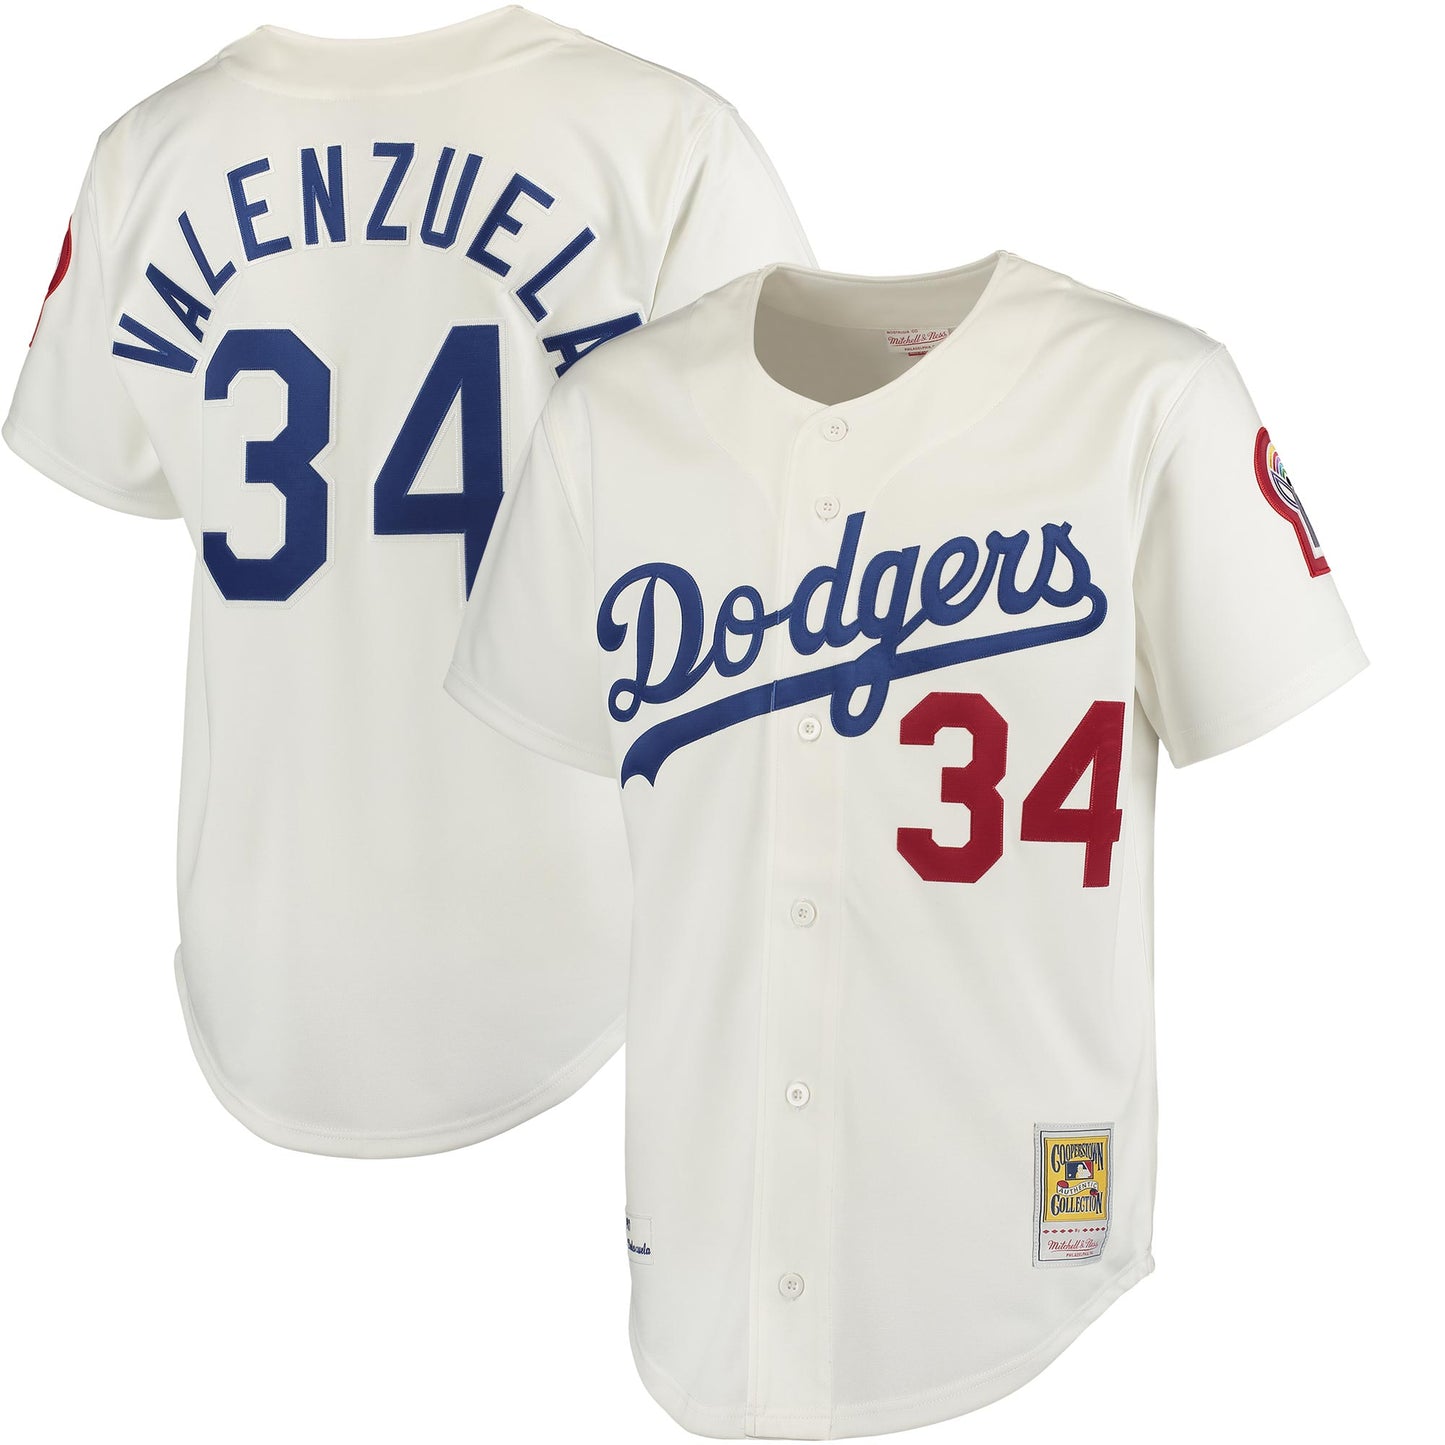 Fernando Valenzuela Los Angeles Dodgers Mitchell & Ness Authentic Jersey - White